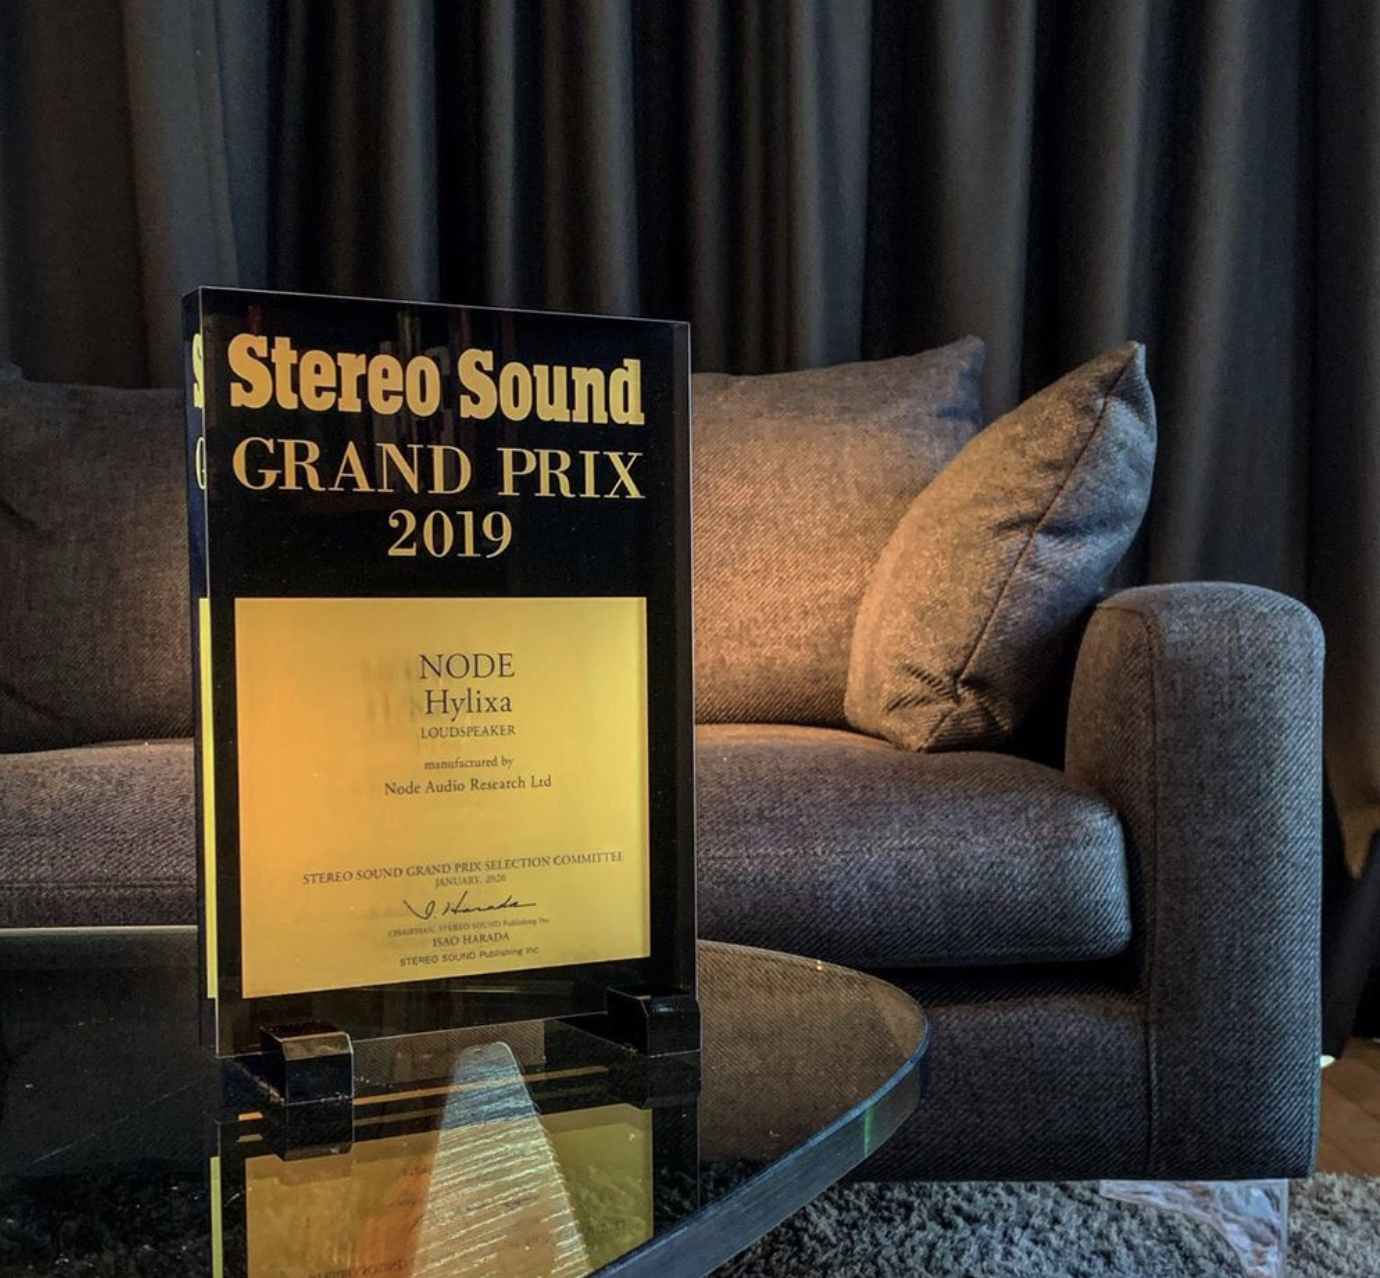  Award won for their #Hylixa speakers, in Japan’s Stereosound magazine 2019 Grand Prix. 